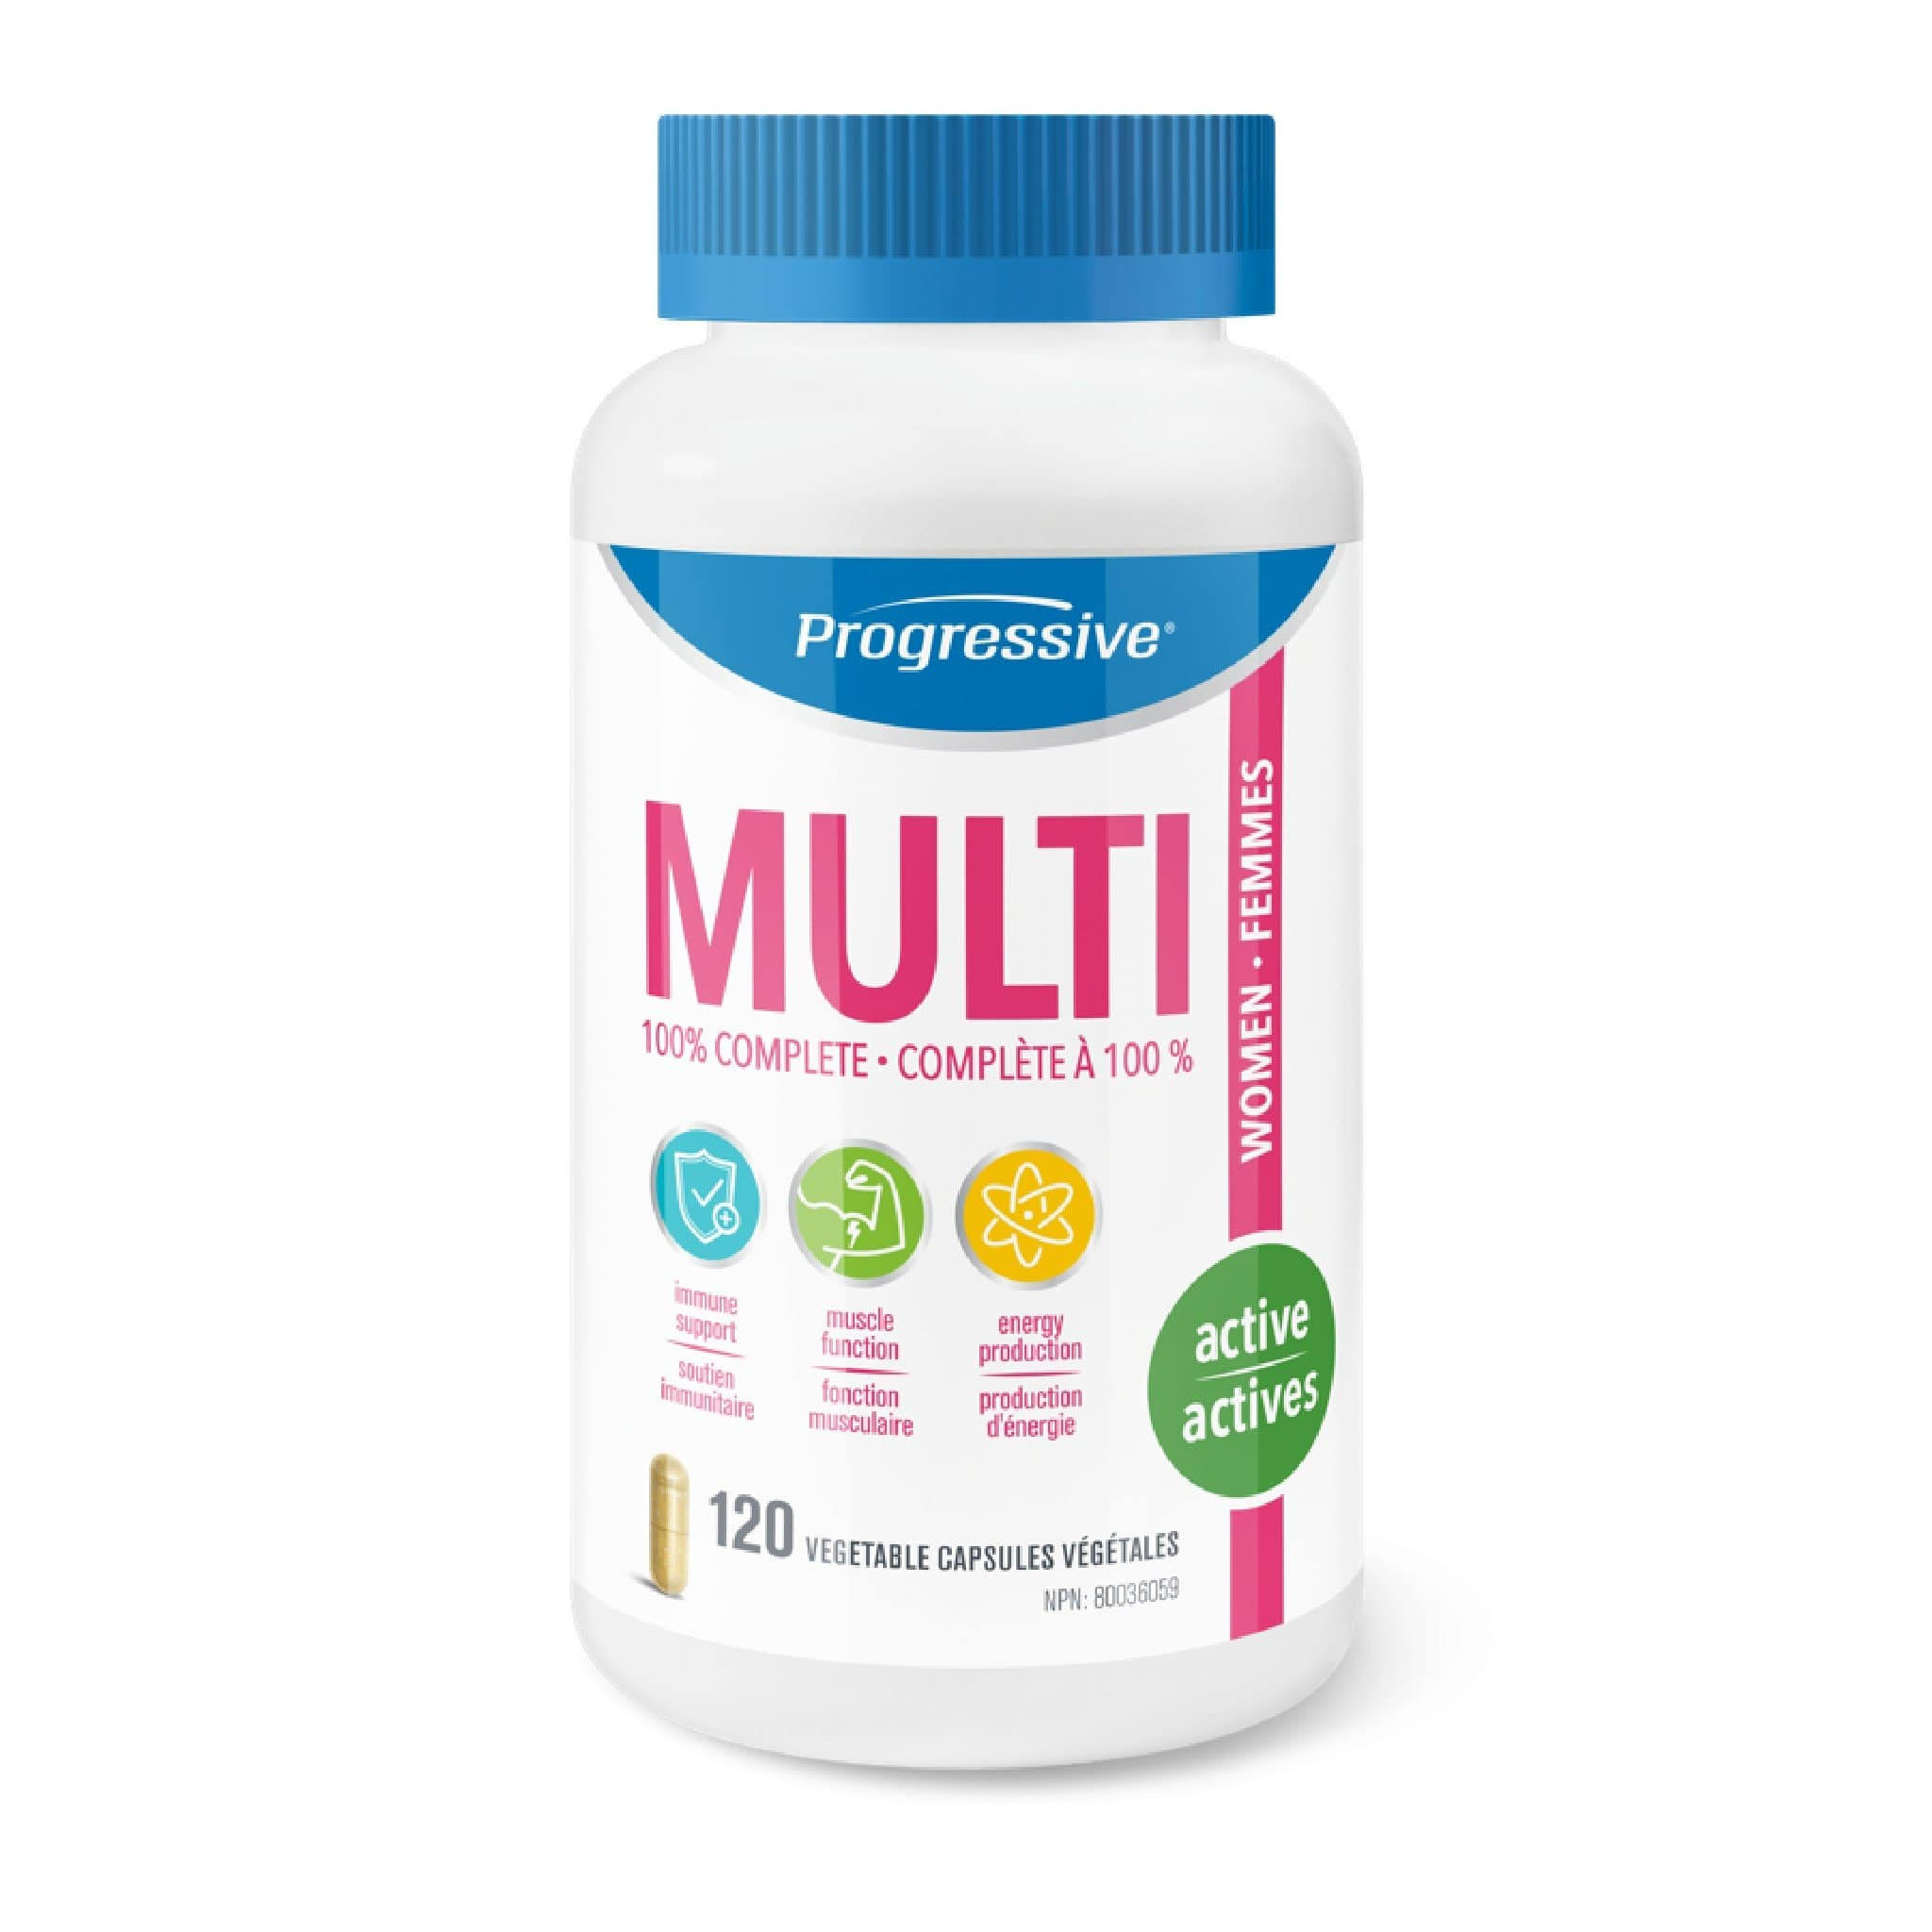 Progressive Women Multivitamins Supplement - 120ct